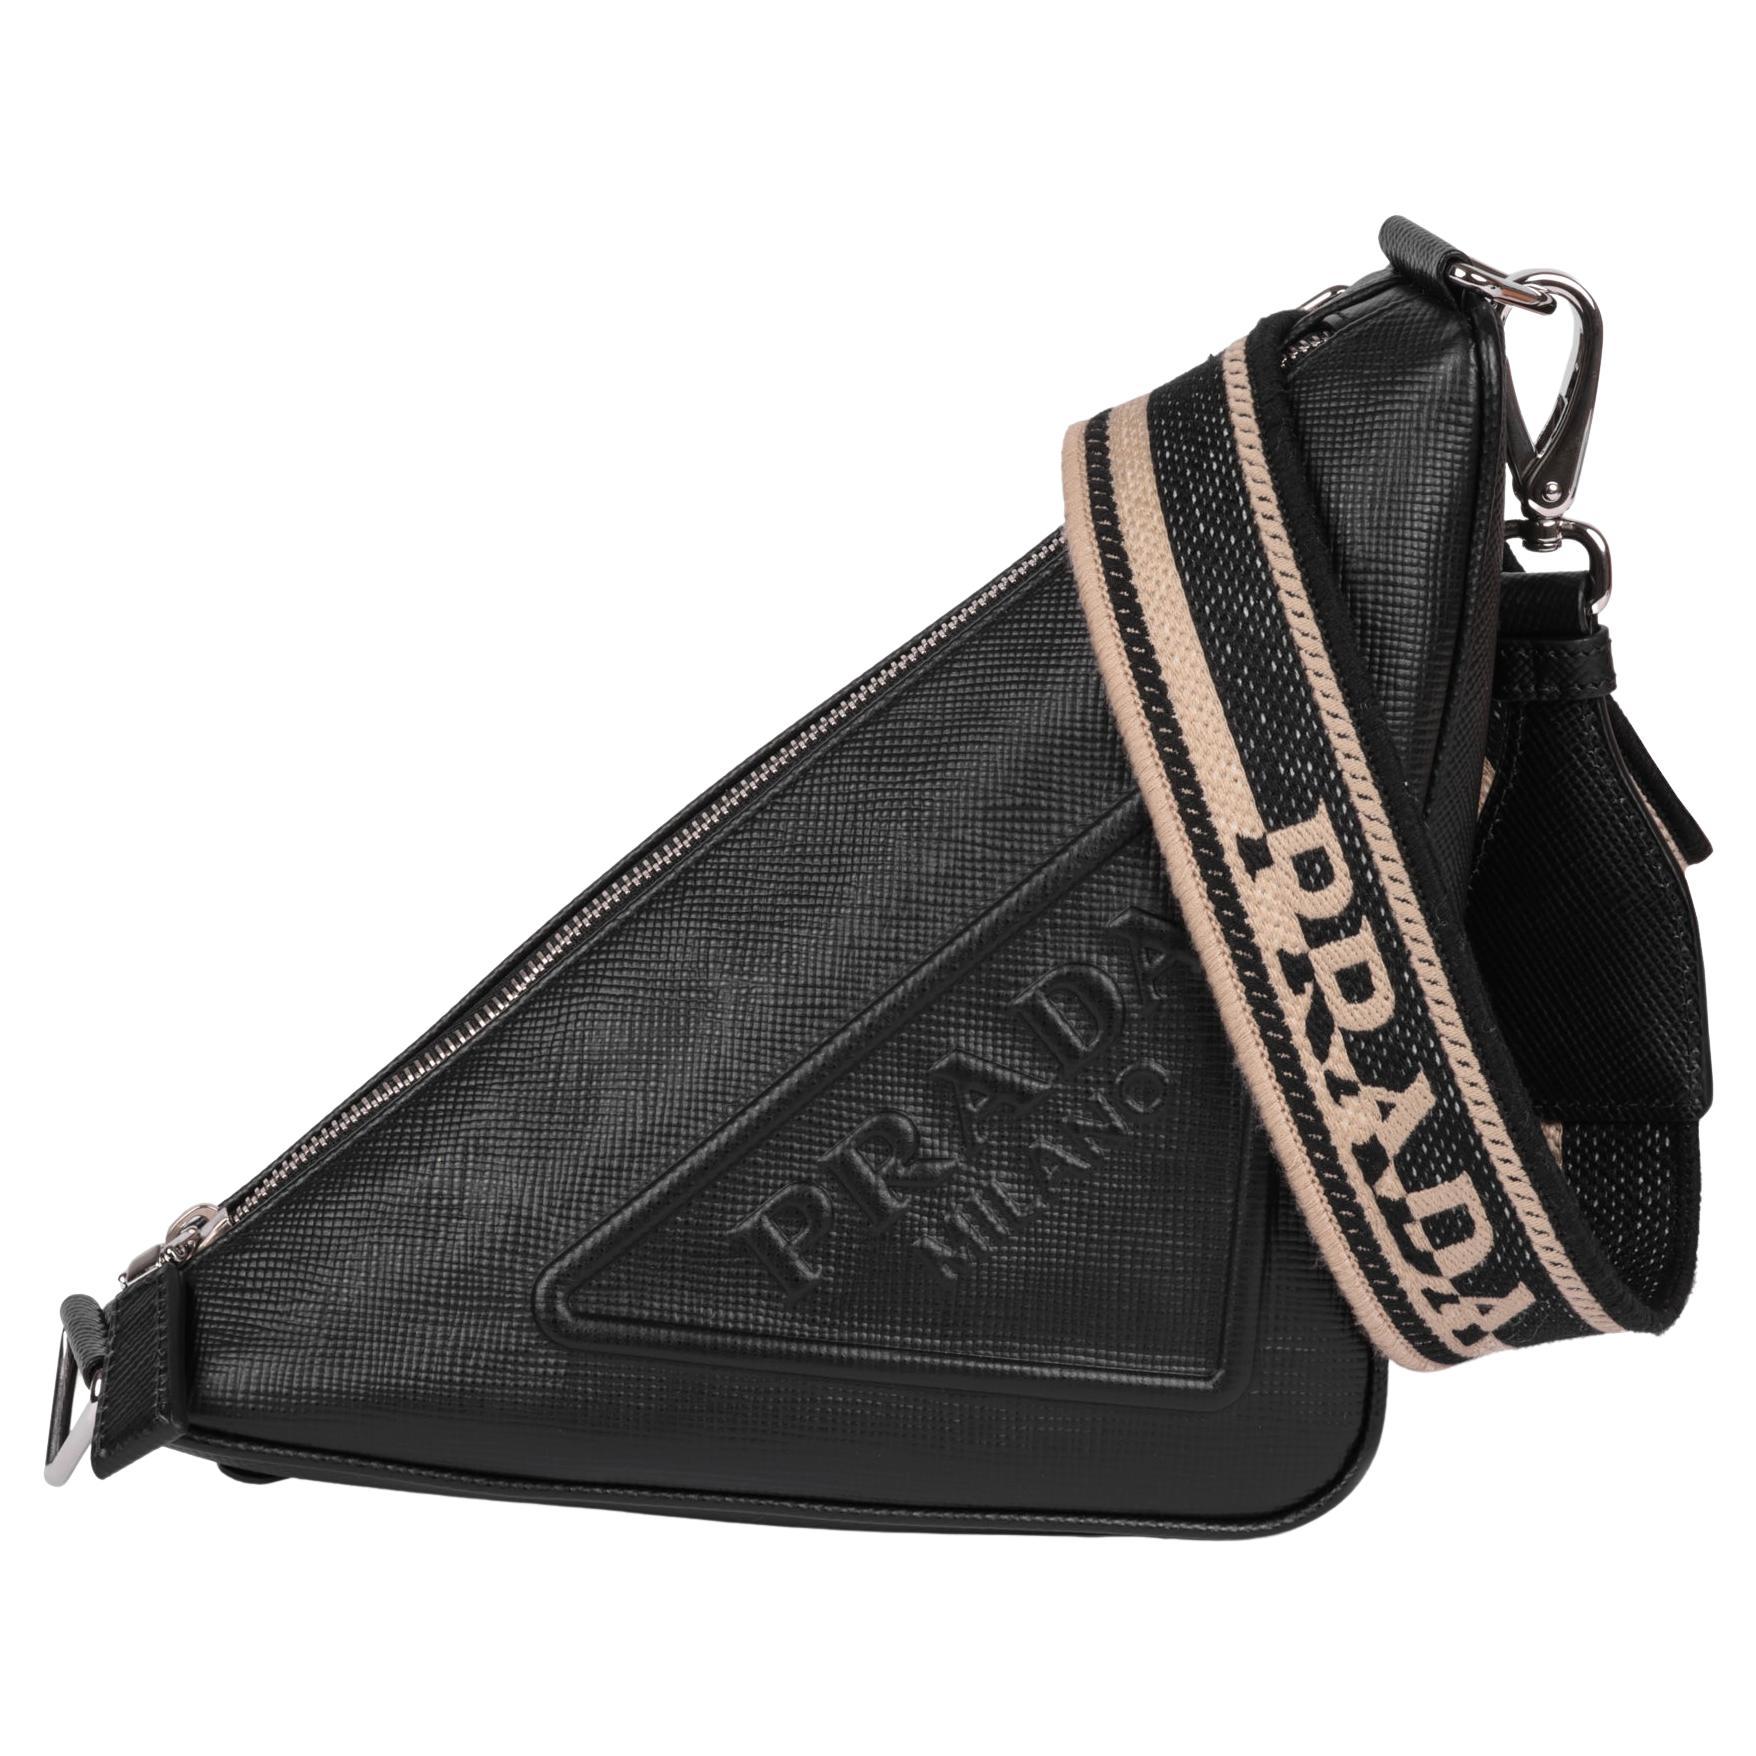 Prada Saffiano Triangle Bag Black in Leather with Silver-tone - US